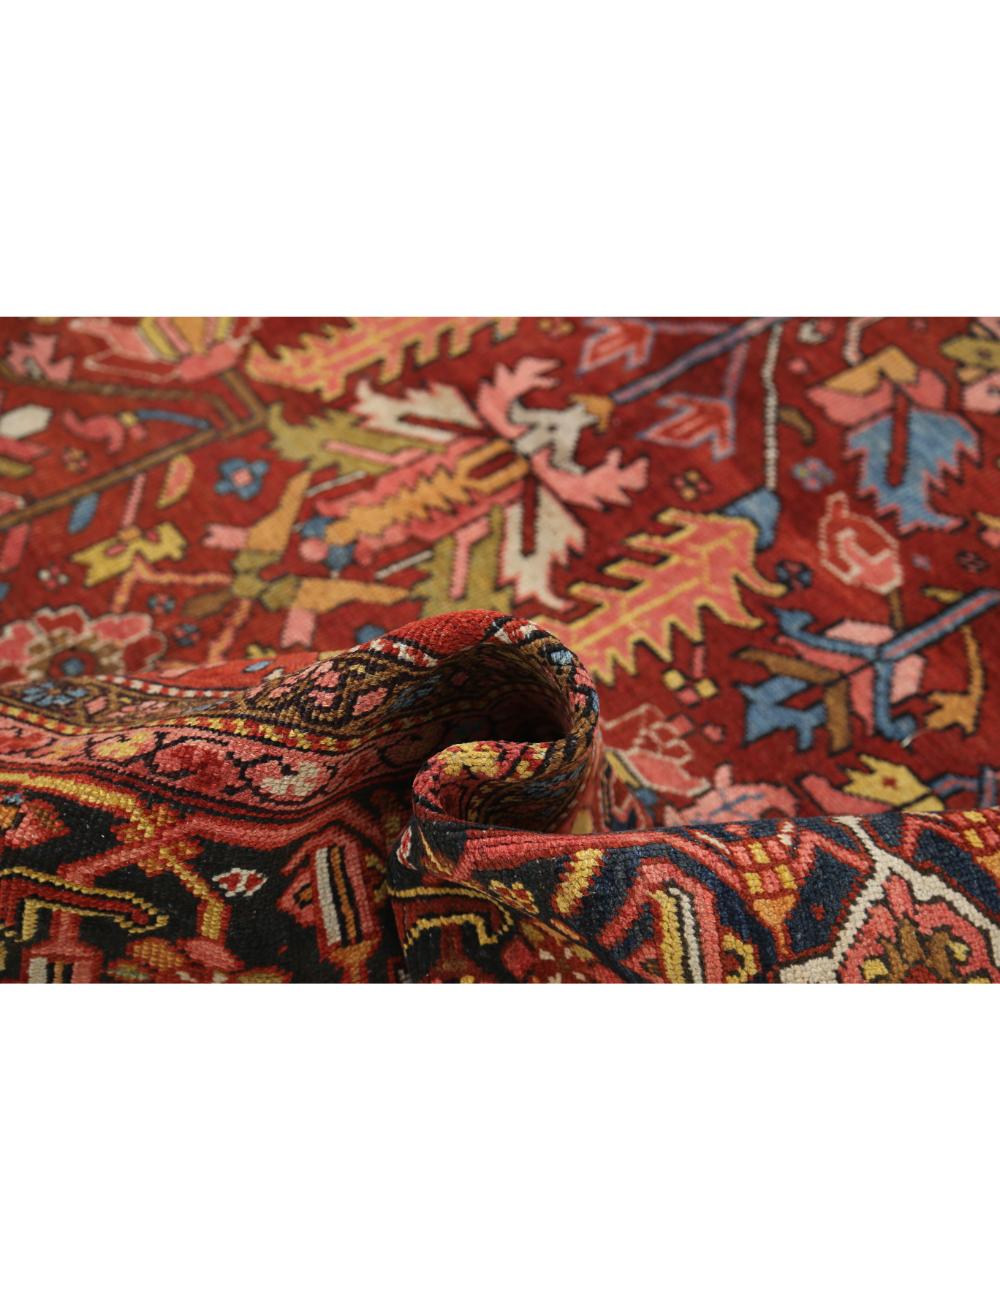 Hand Knotted Antique Persian Heriz Wool Rug - 8'4'' x 11'1'' Arteverk Arteverk Rugs